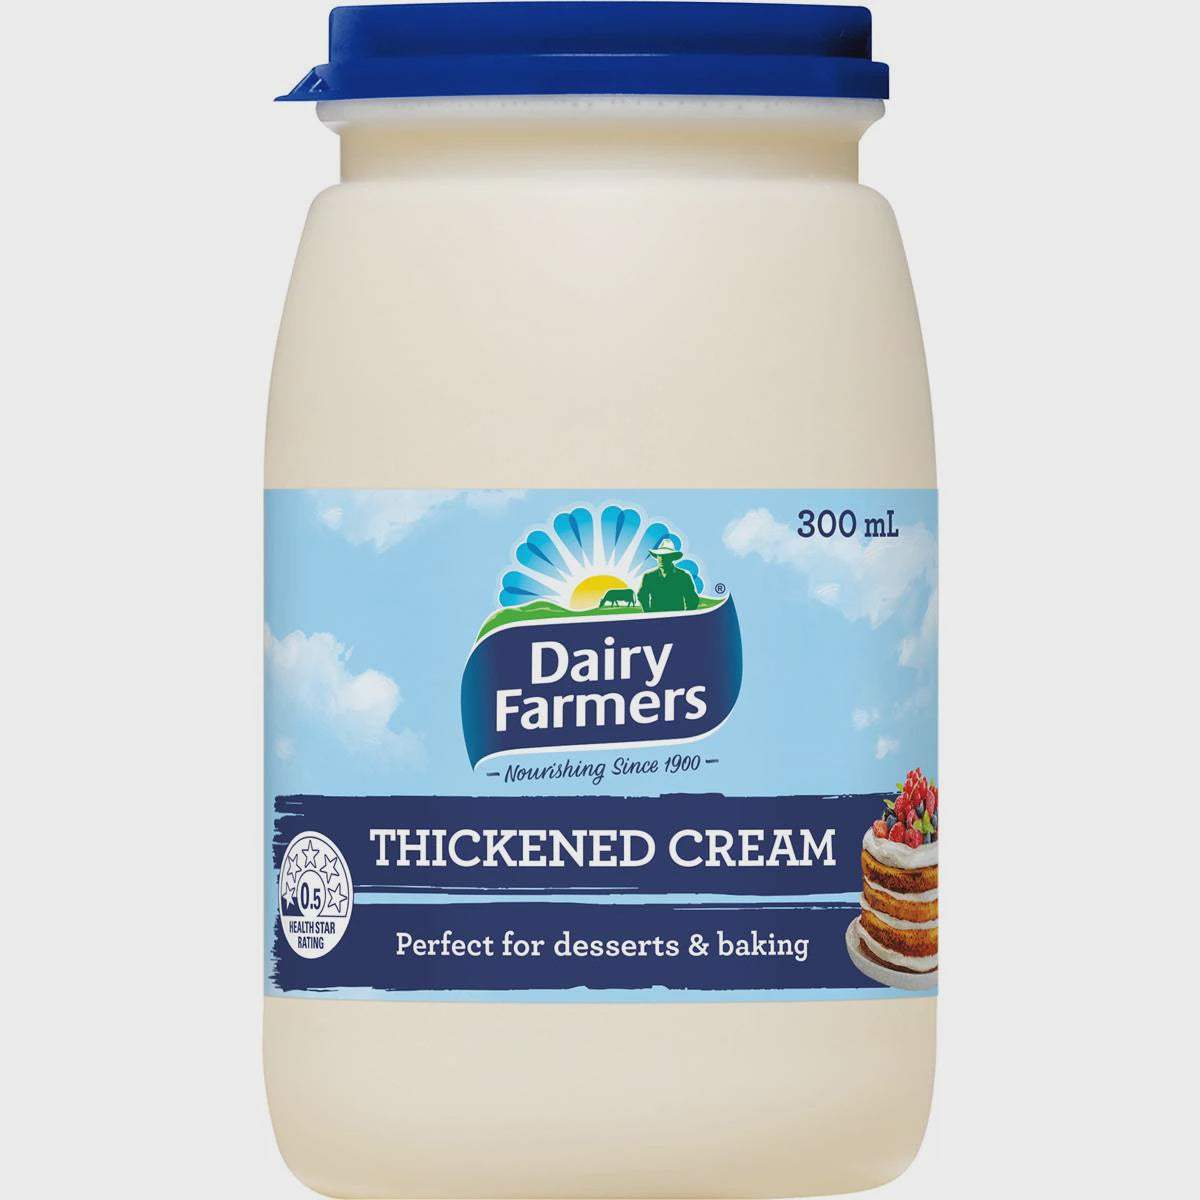 Dairy Farmers Thickened Cream 300ml